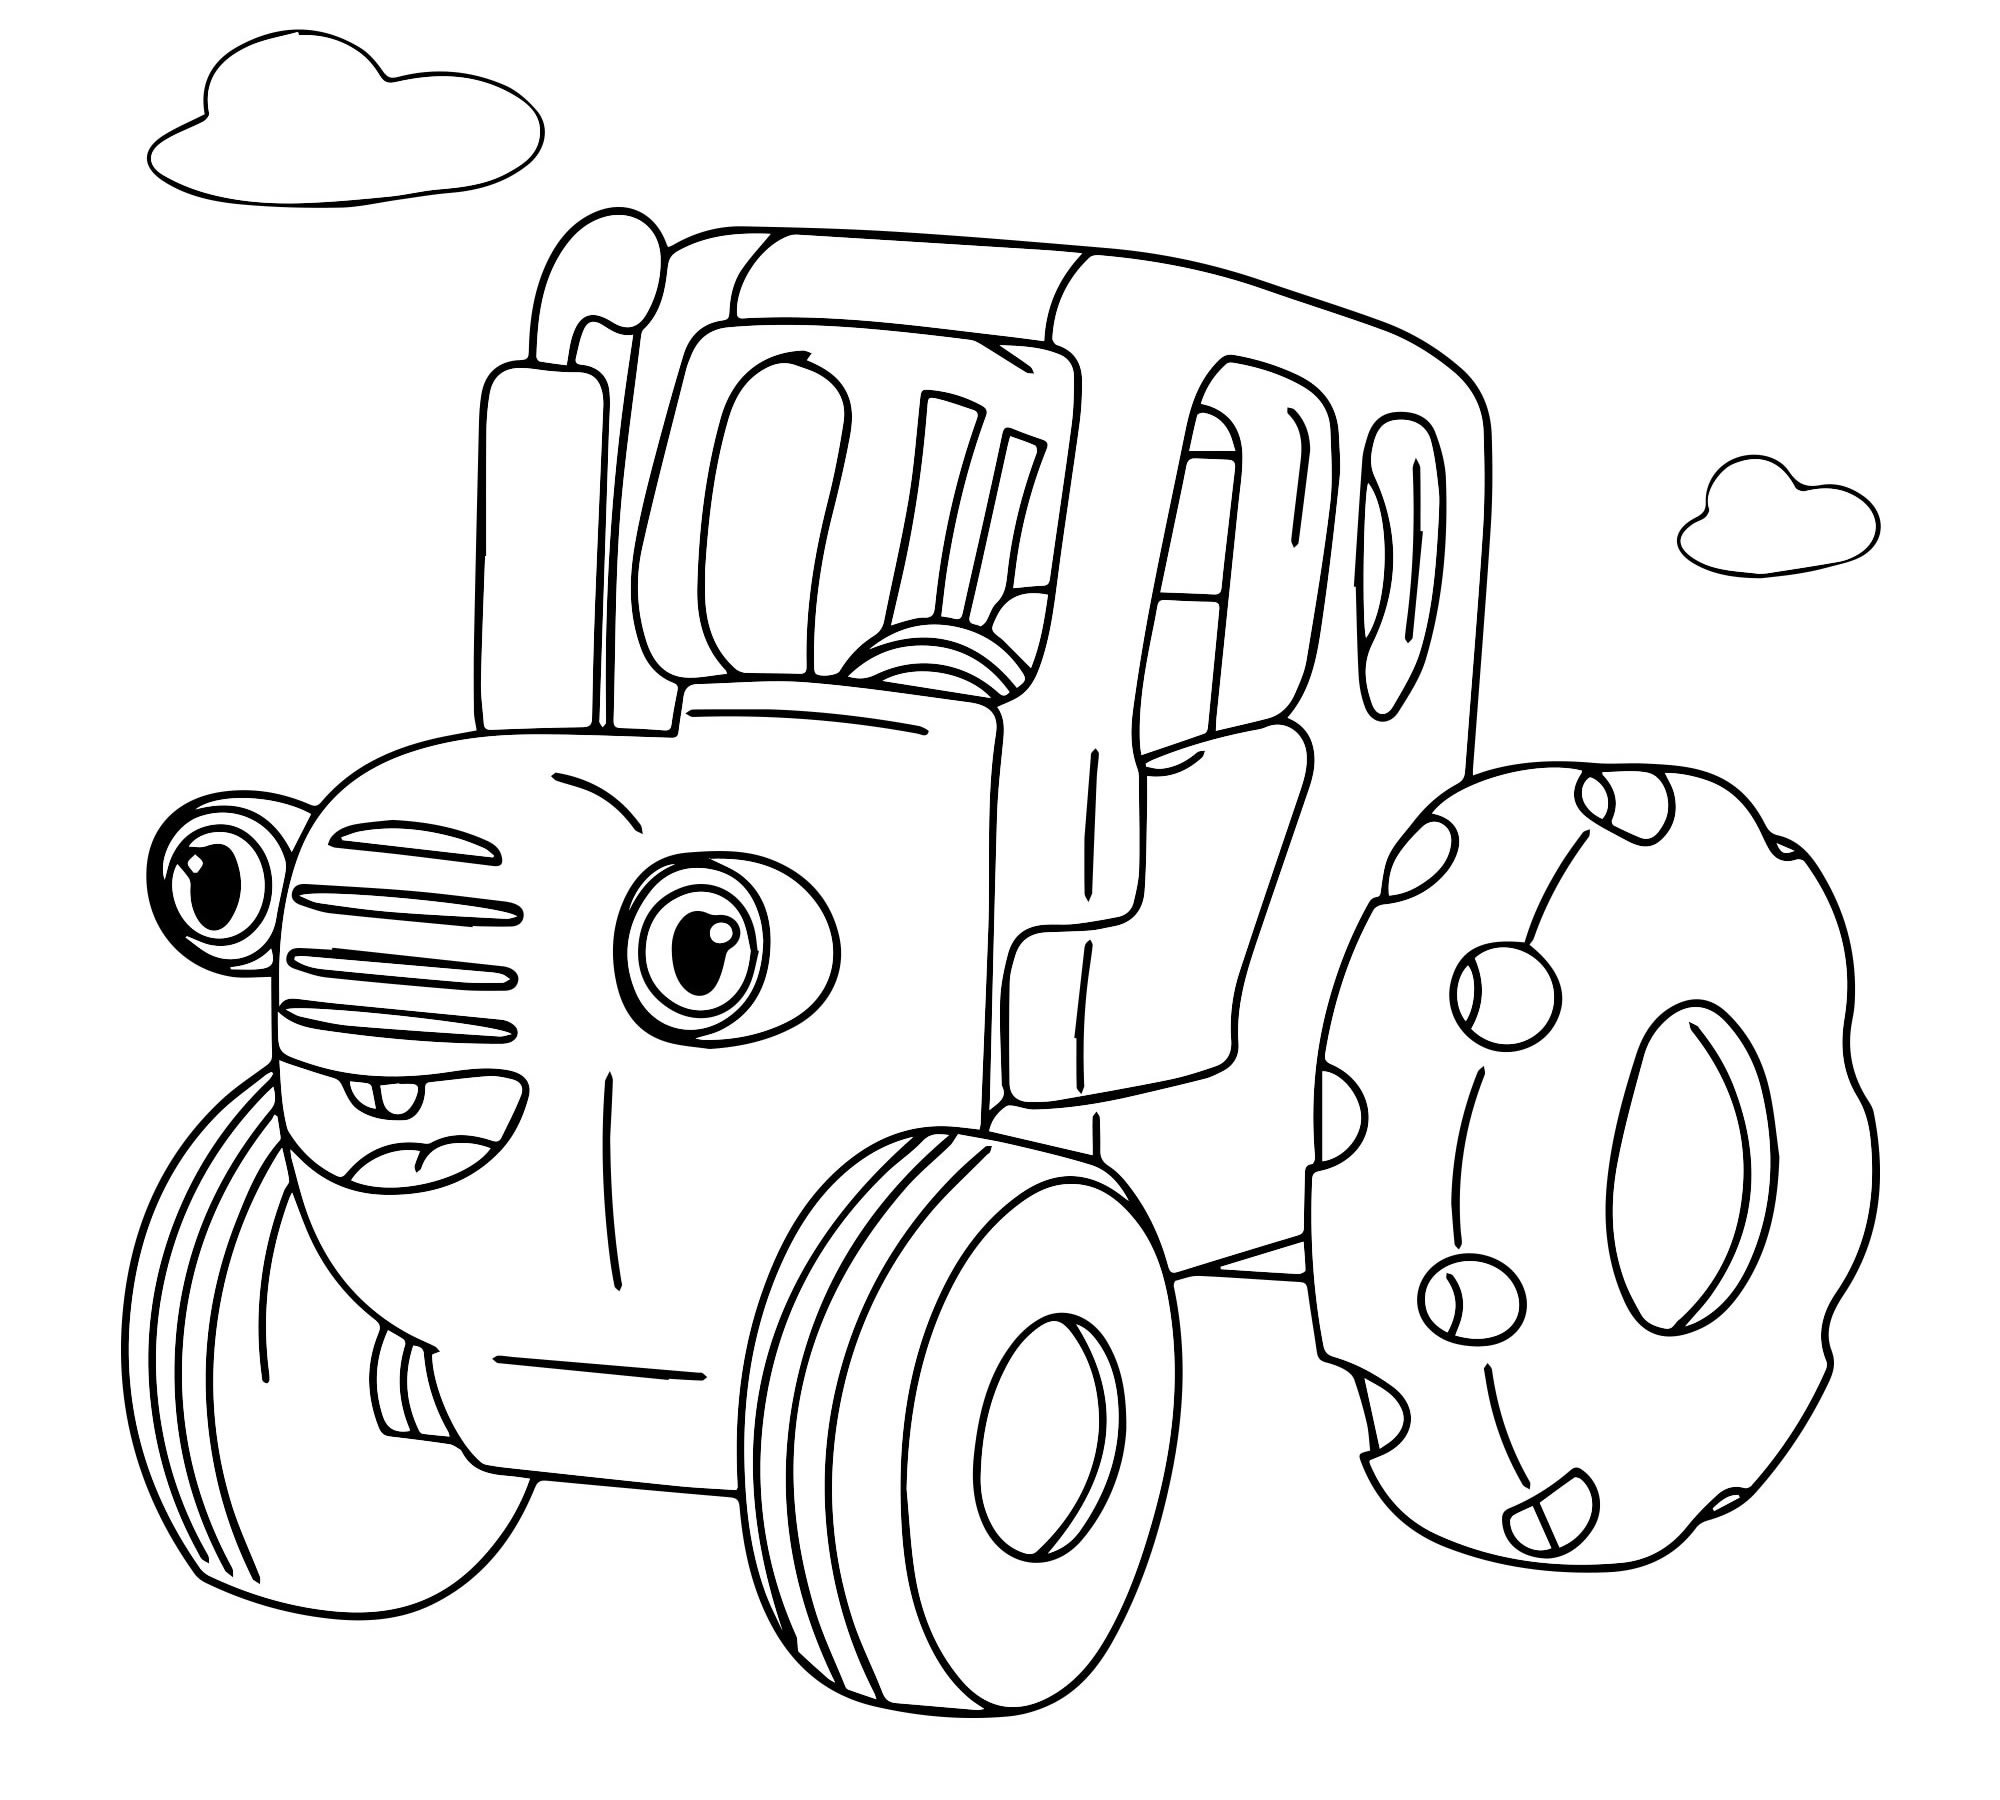 Трактор раскраска для детей 7 лет. Трактор для раскрашивания. Трактор для раскрашивания детям. Трактор раскраска для детей. Раскраска «синий трактор».